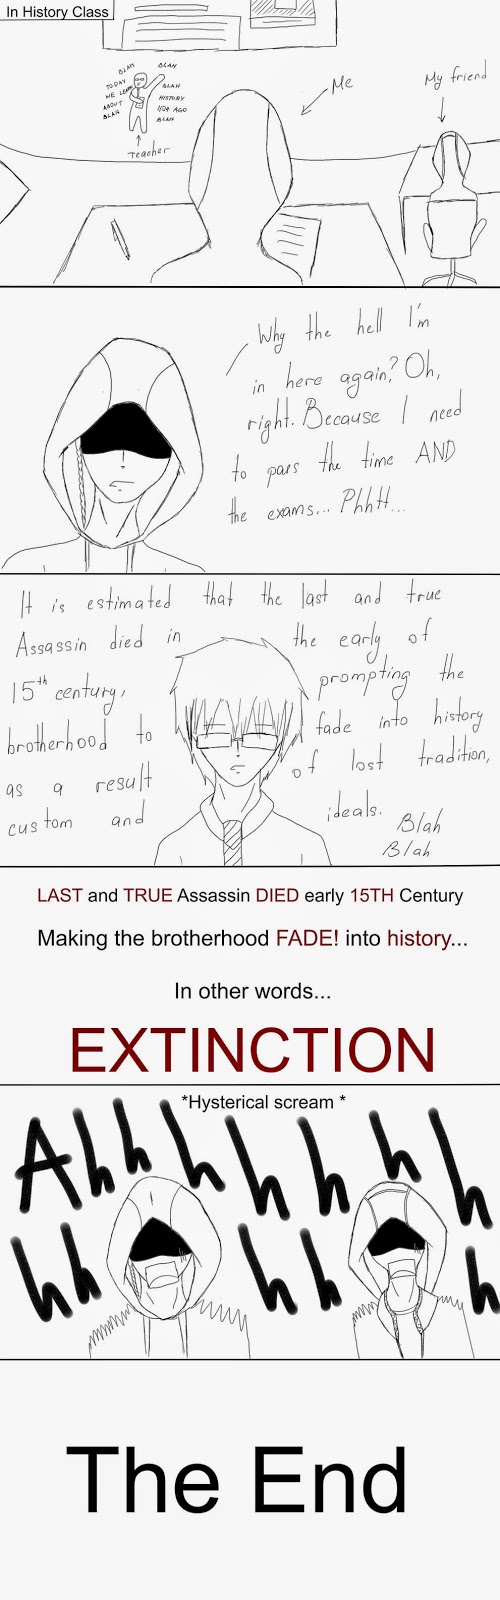 History Kills (Based on Assassin's Wikipedia info)